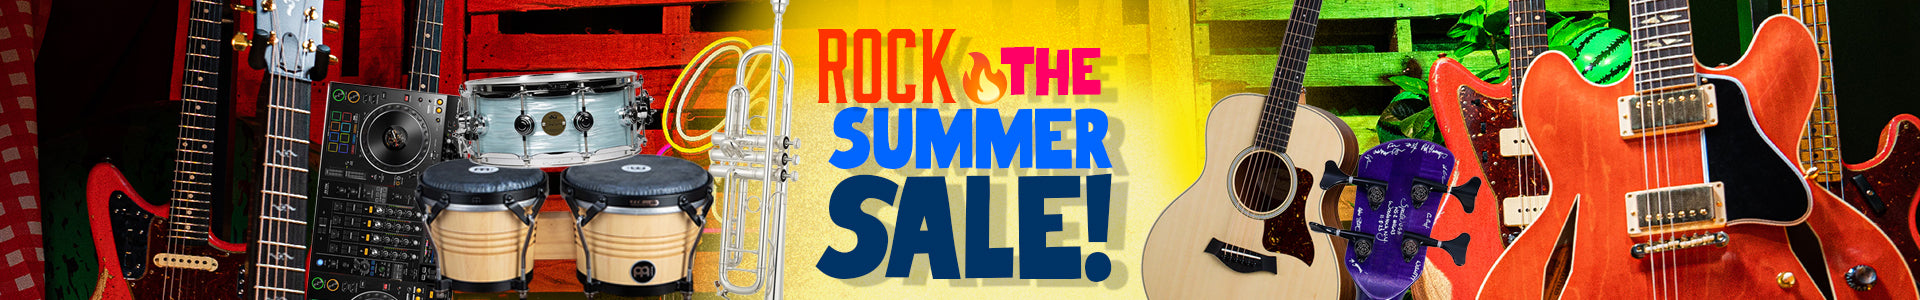 Rock the summer sale!